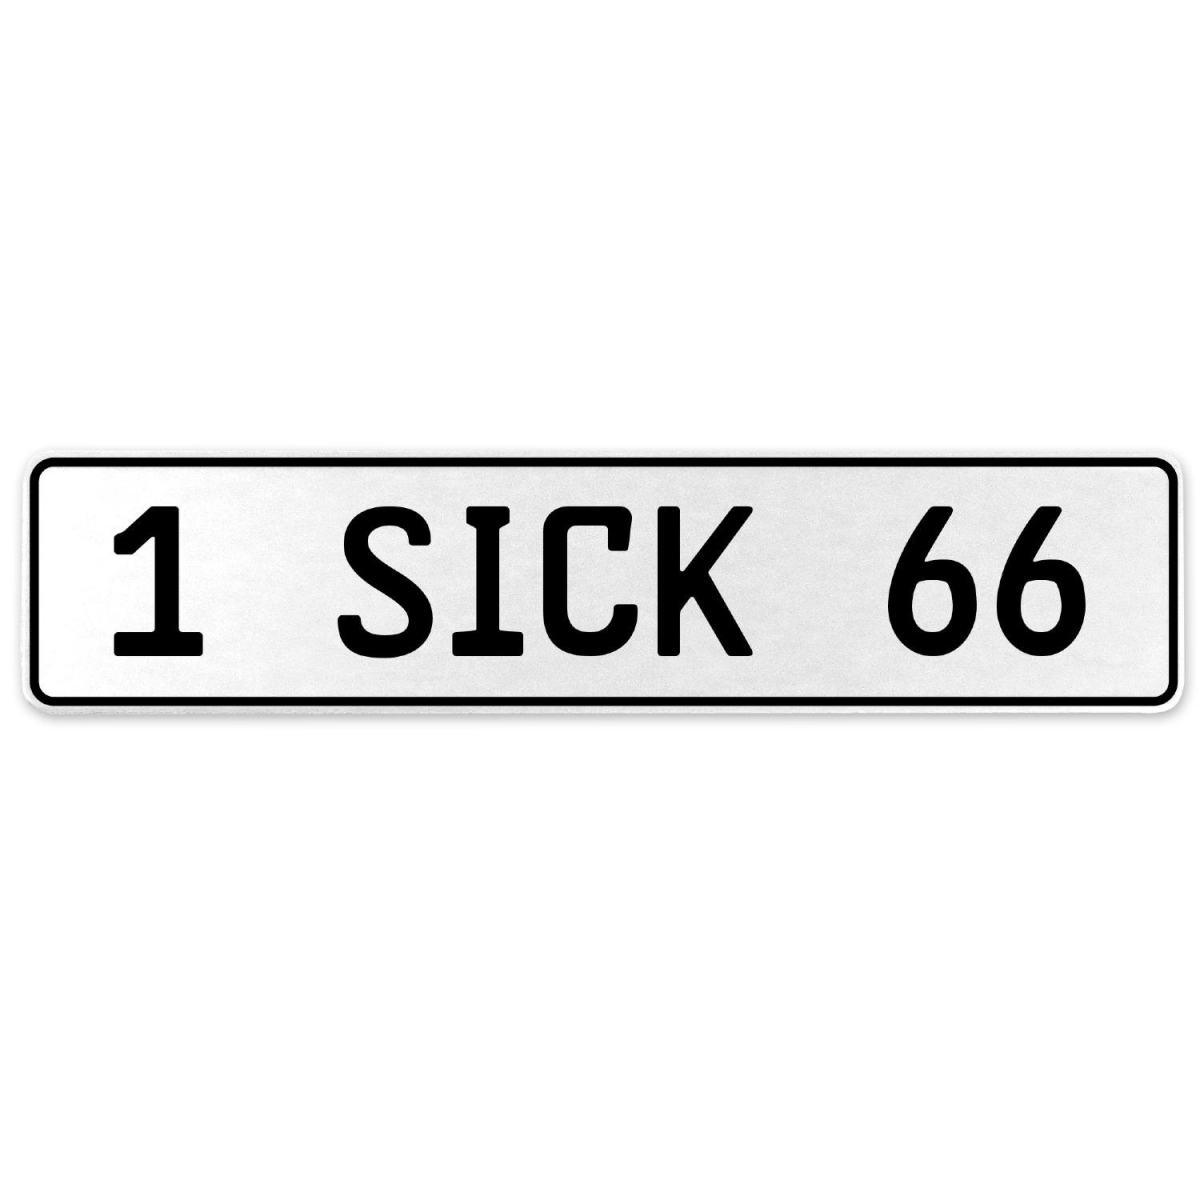 554465 1 Sick 66 - White Aluminum Street Sign Mancave Euro Plate Name Door Sign Wall